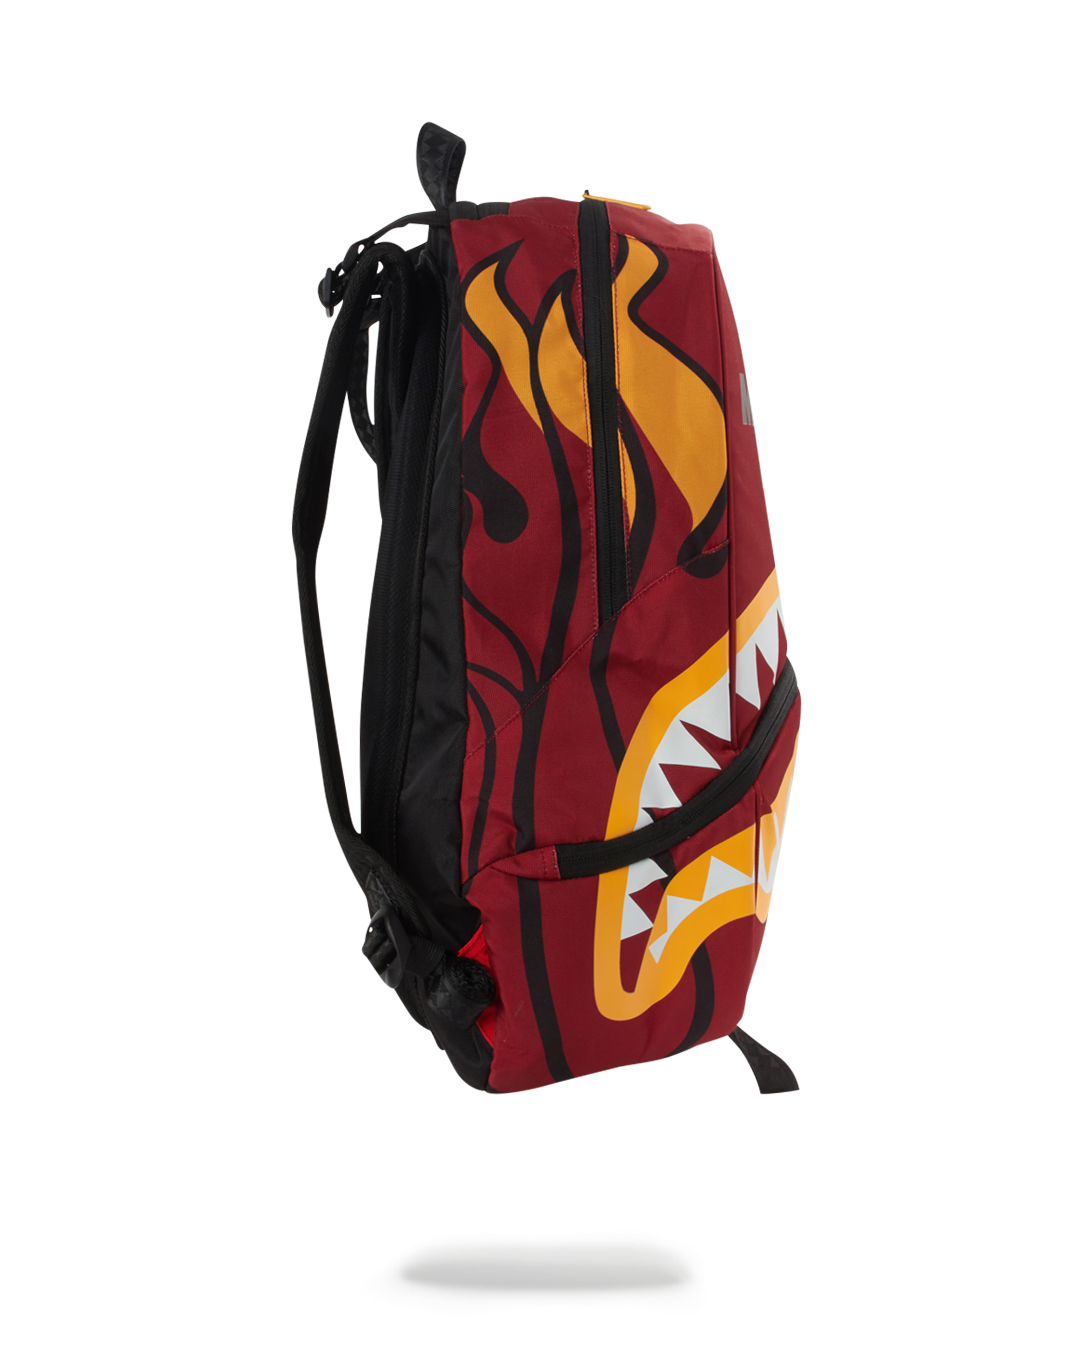 Sprayground NBA LAB Miami Fire Shark Backpack